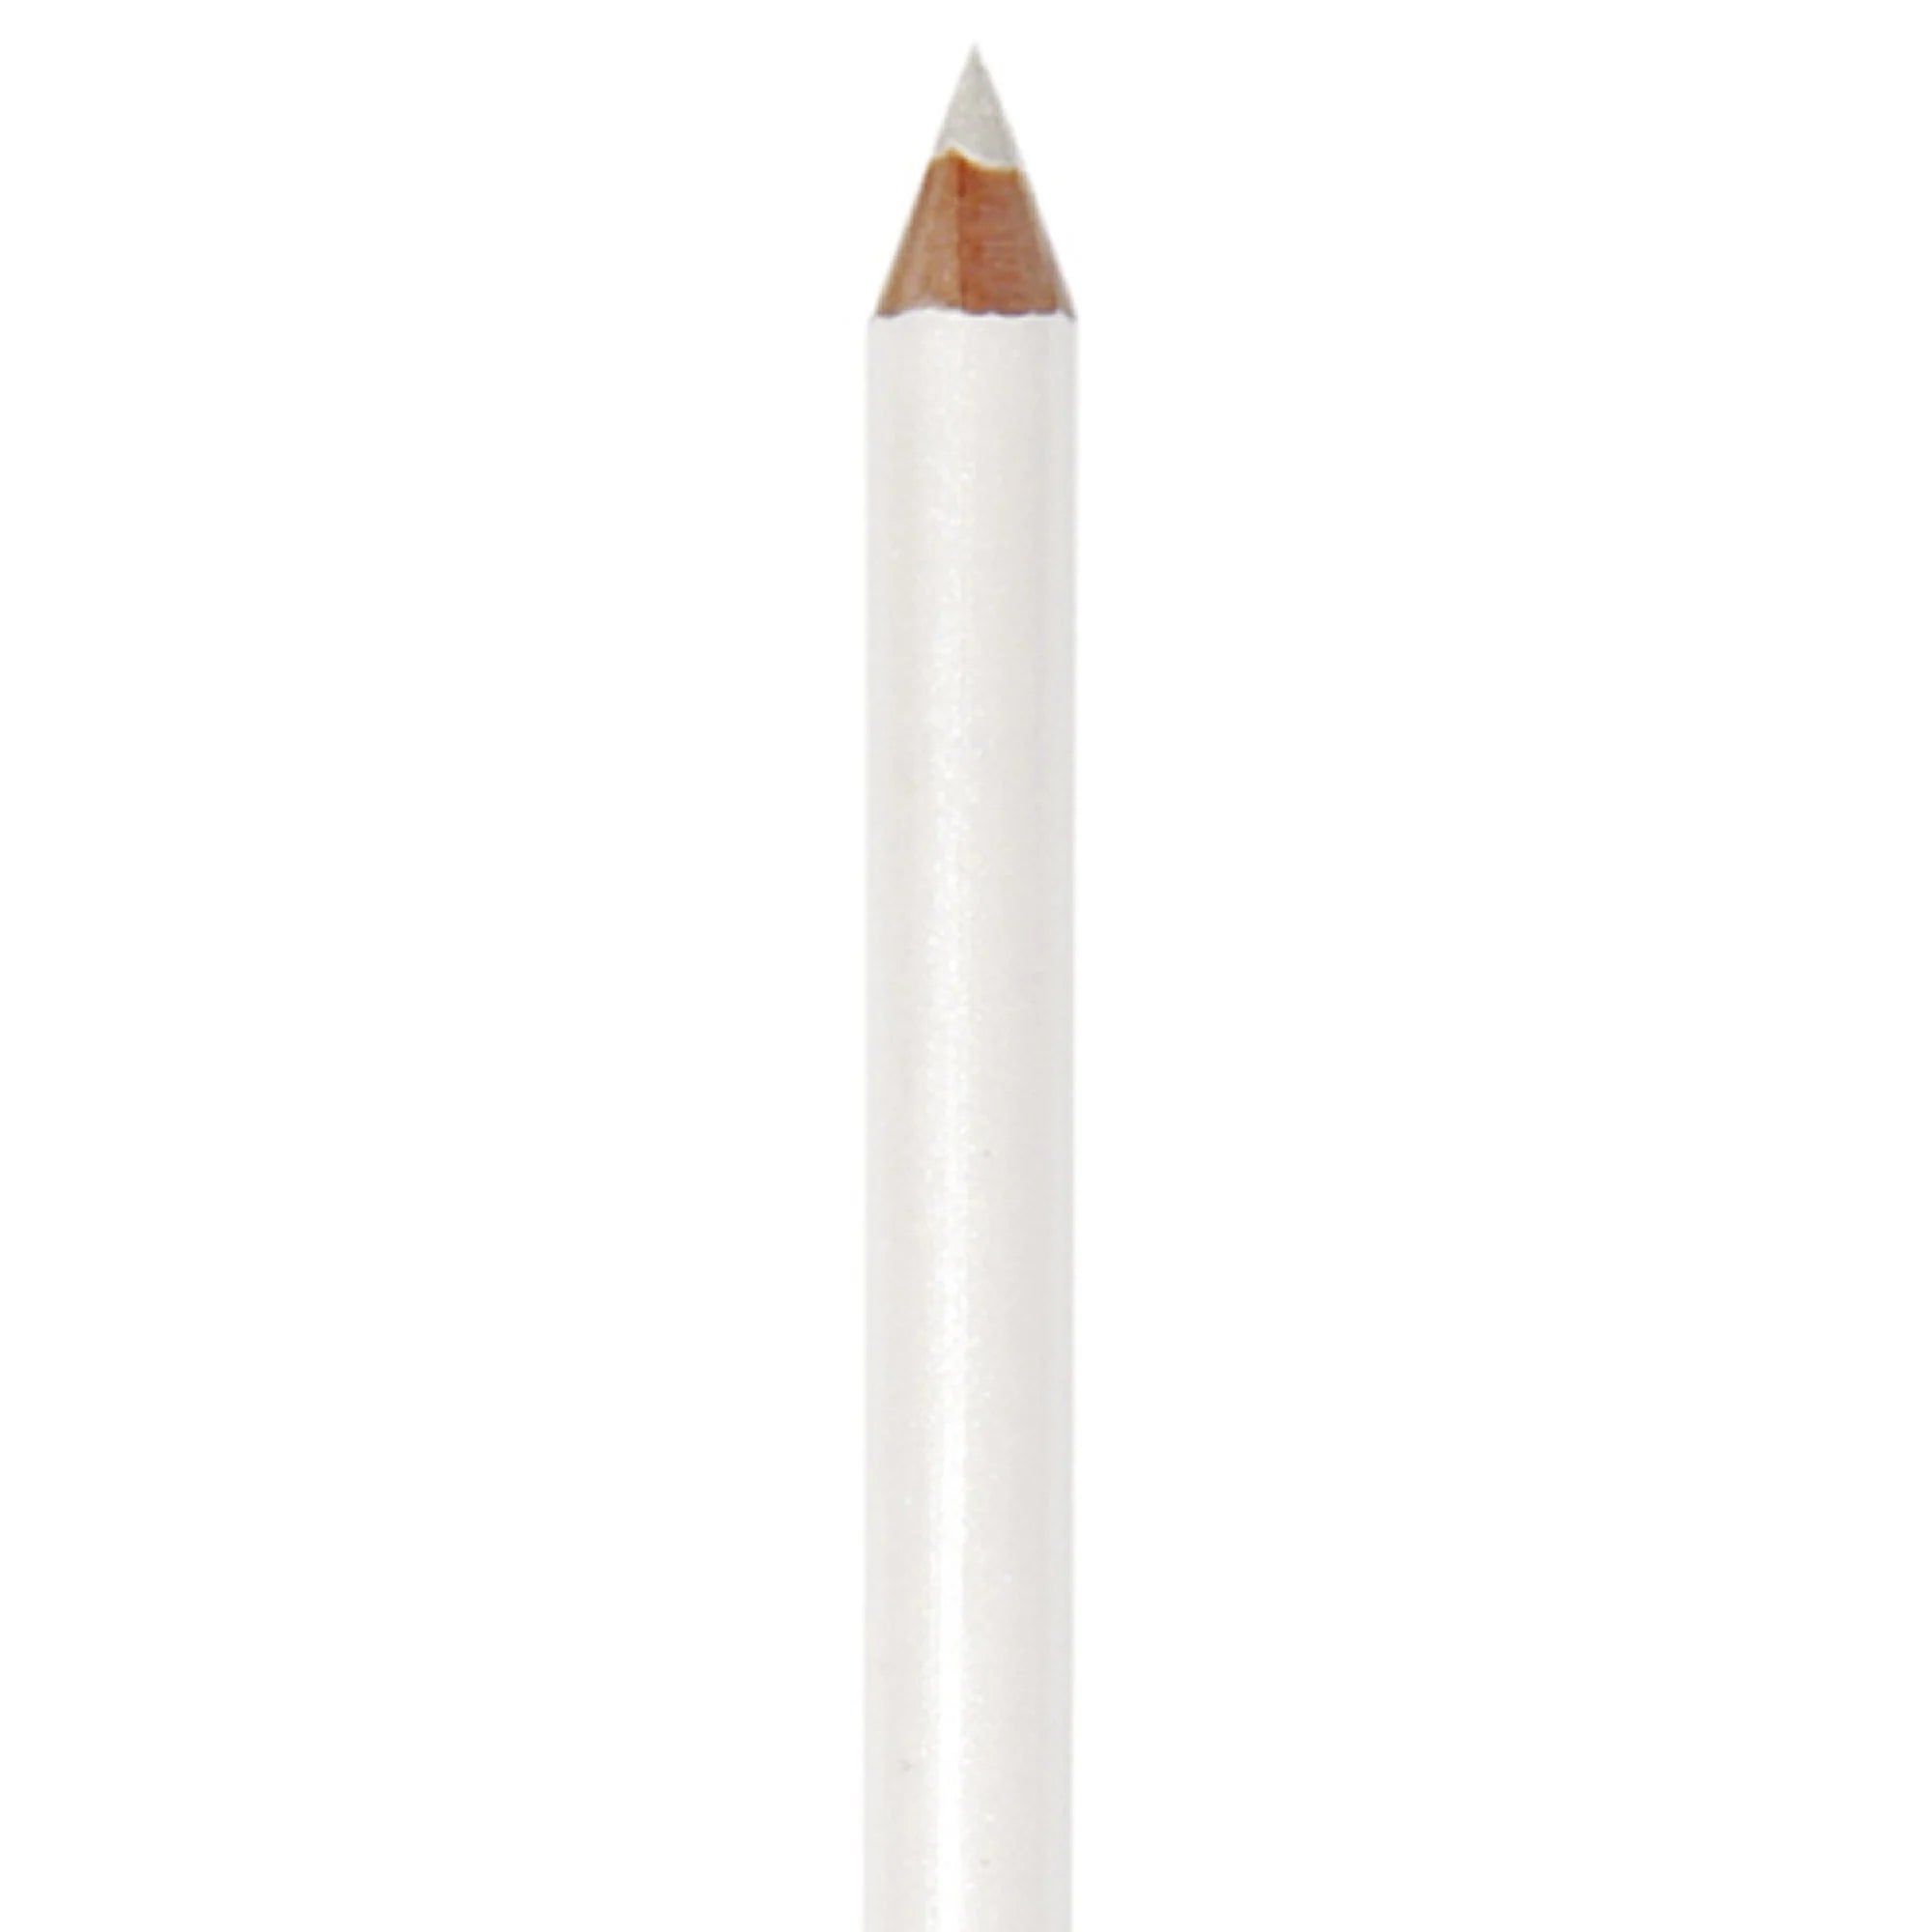 Skin drawing white pencil